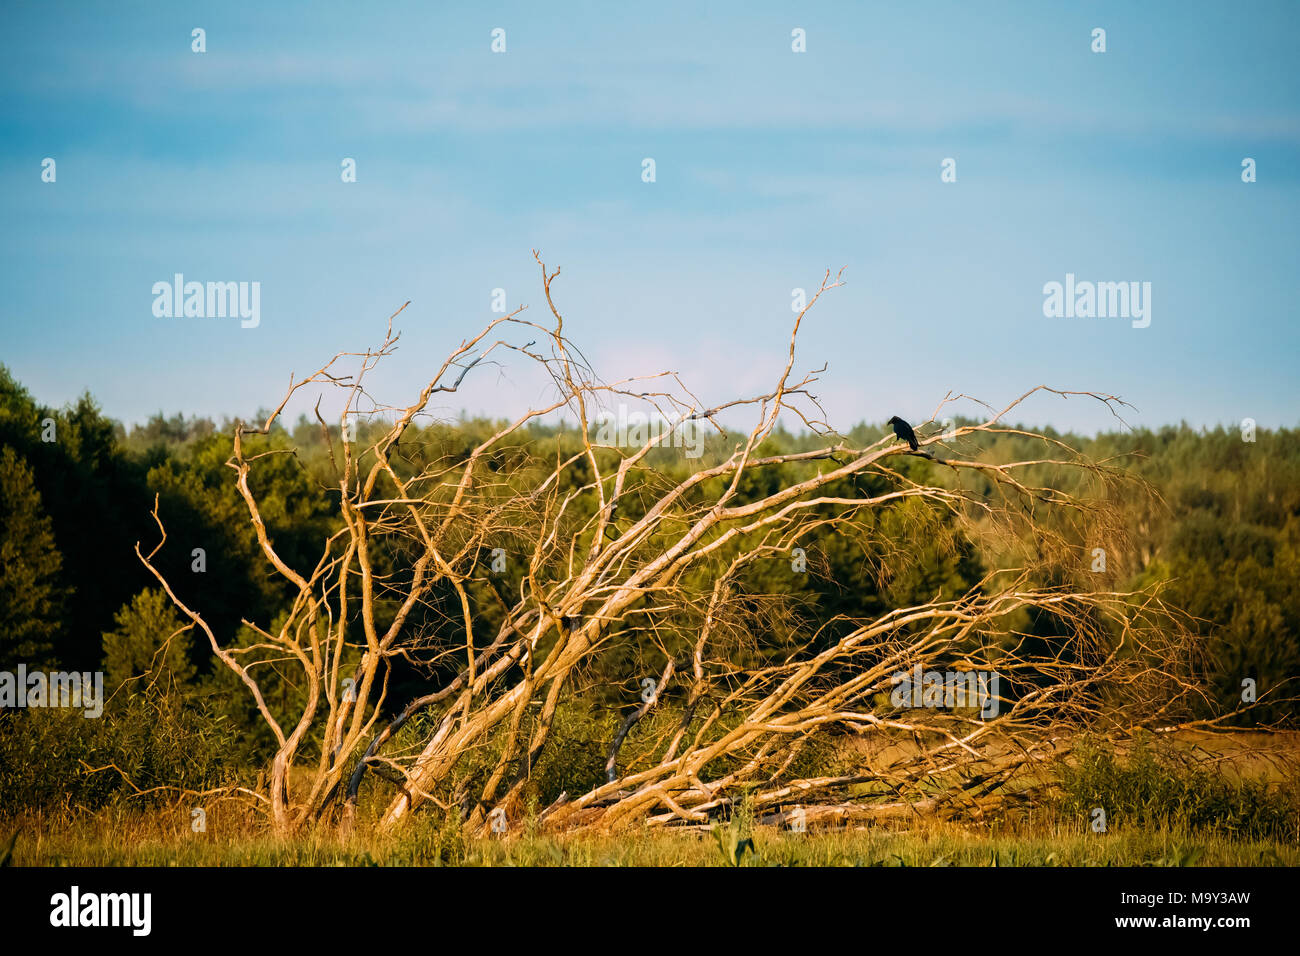 Black Crow Raven Wild Birds Sitting On Dry Fallen Tree In Field. Belarusian Nature. Stock Photo